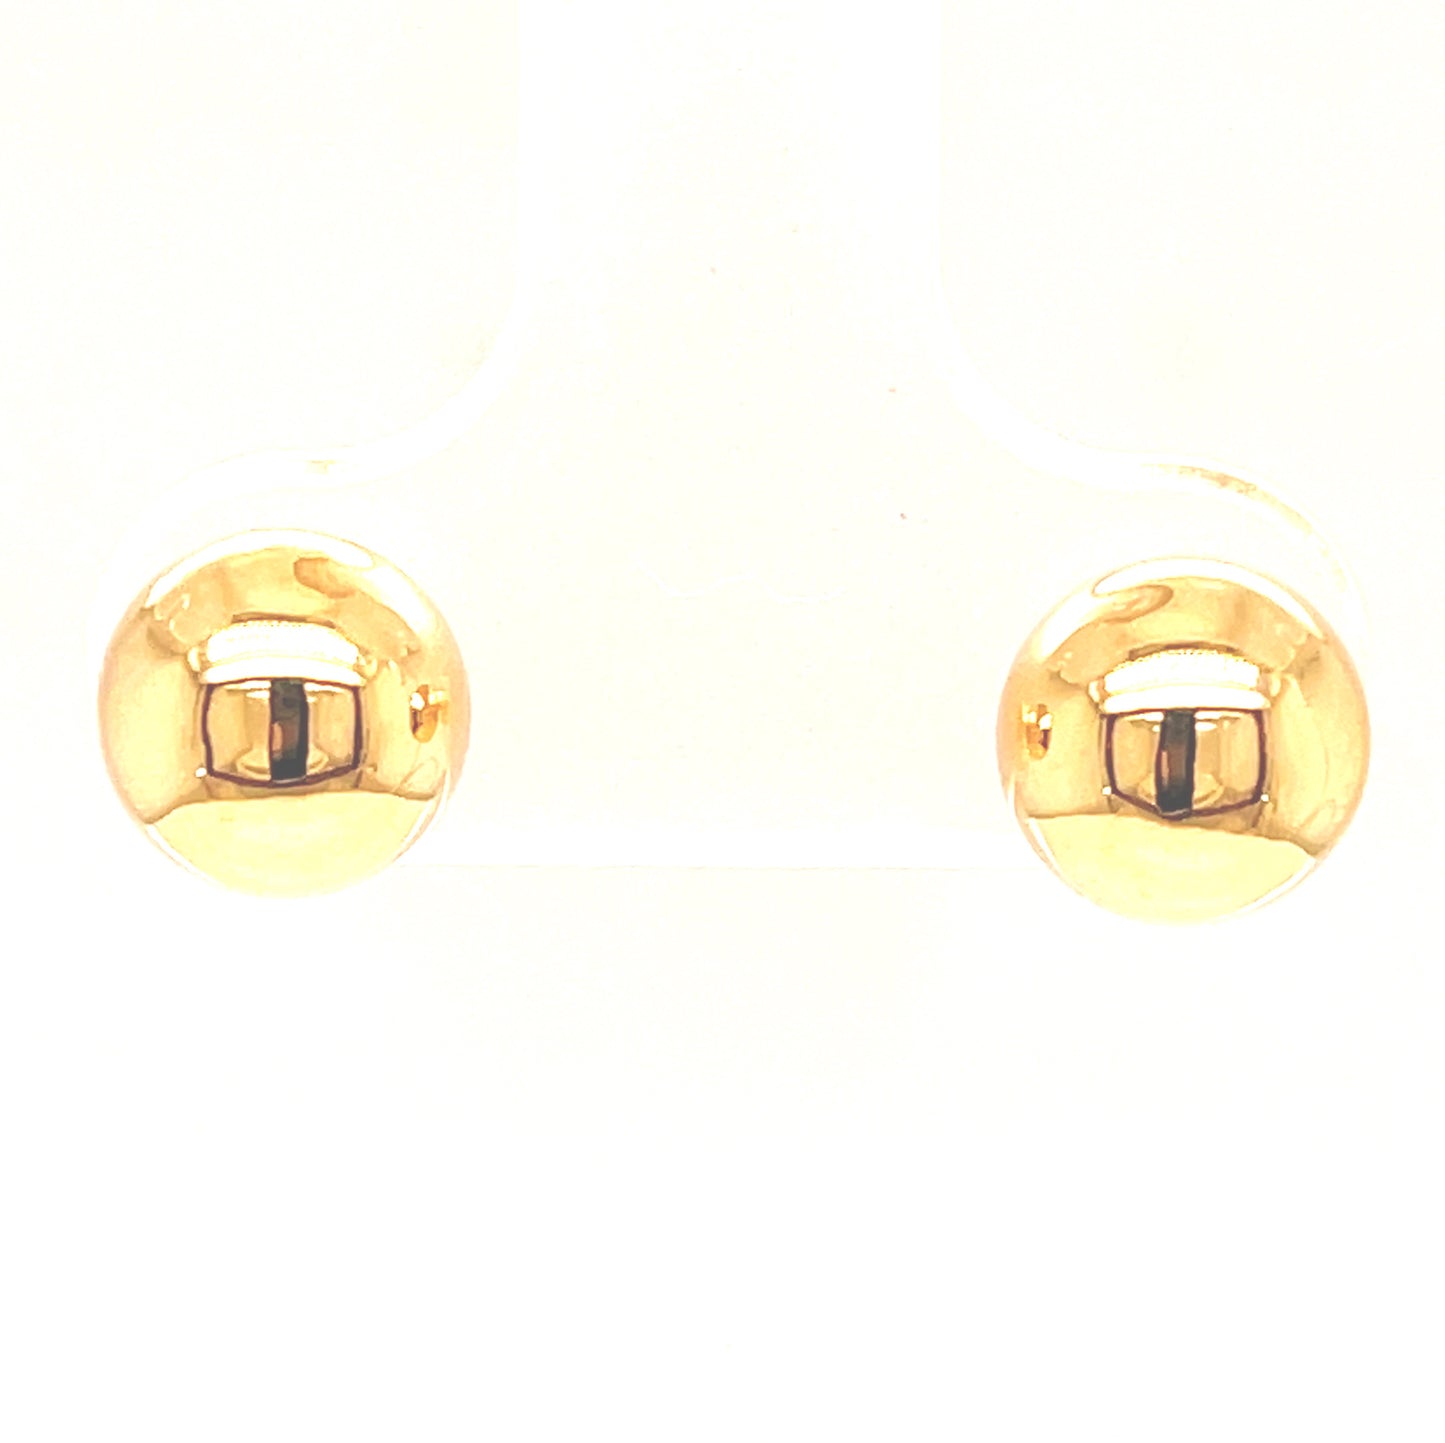 9ct 7mm Ball Stud Earrings